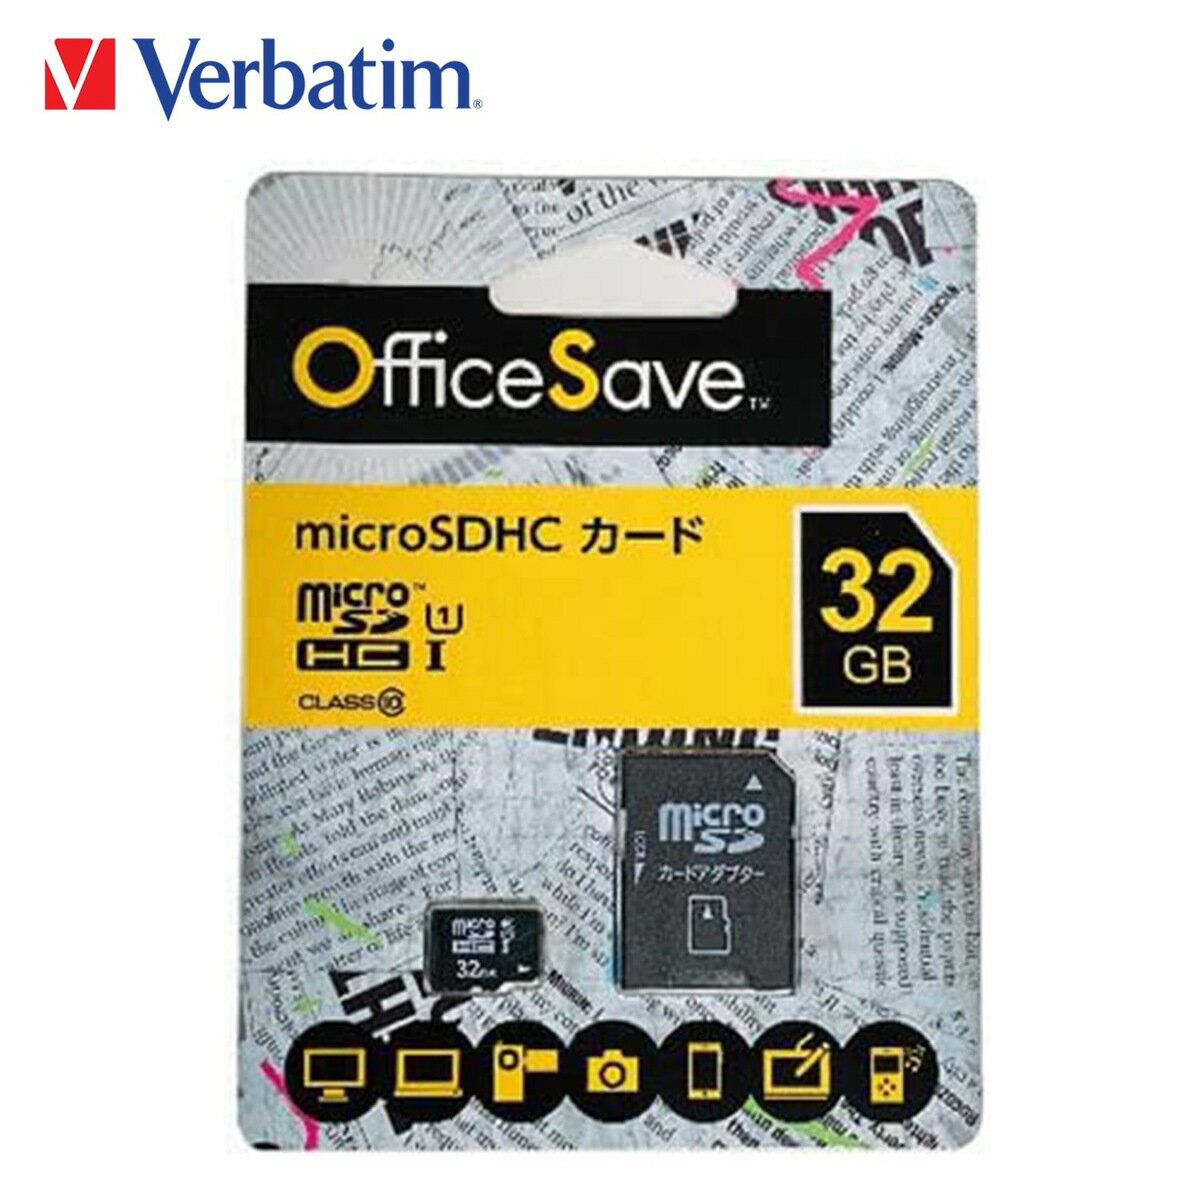 Verbatim micro SDHCカード 32GB Office Save Cl